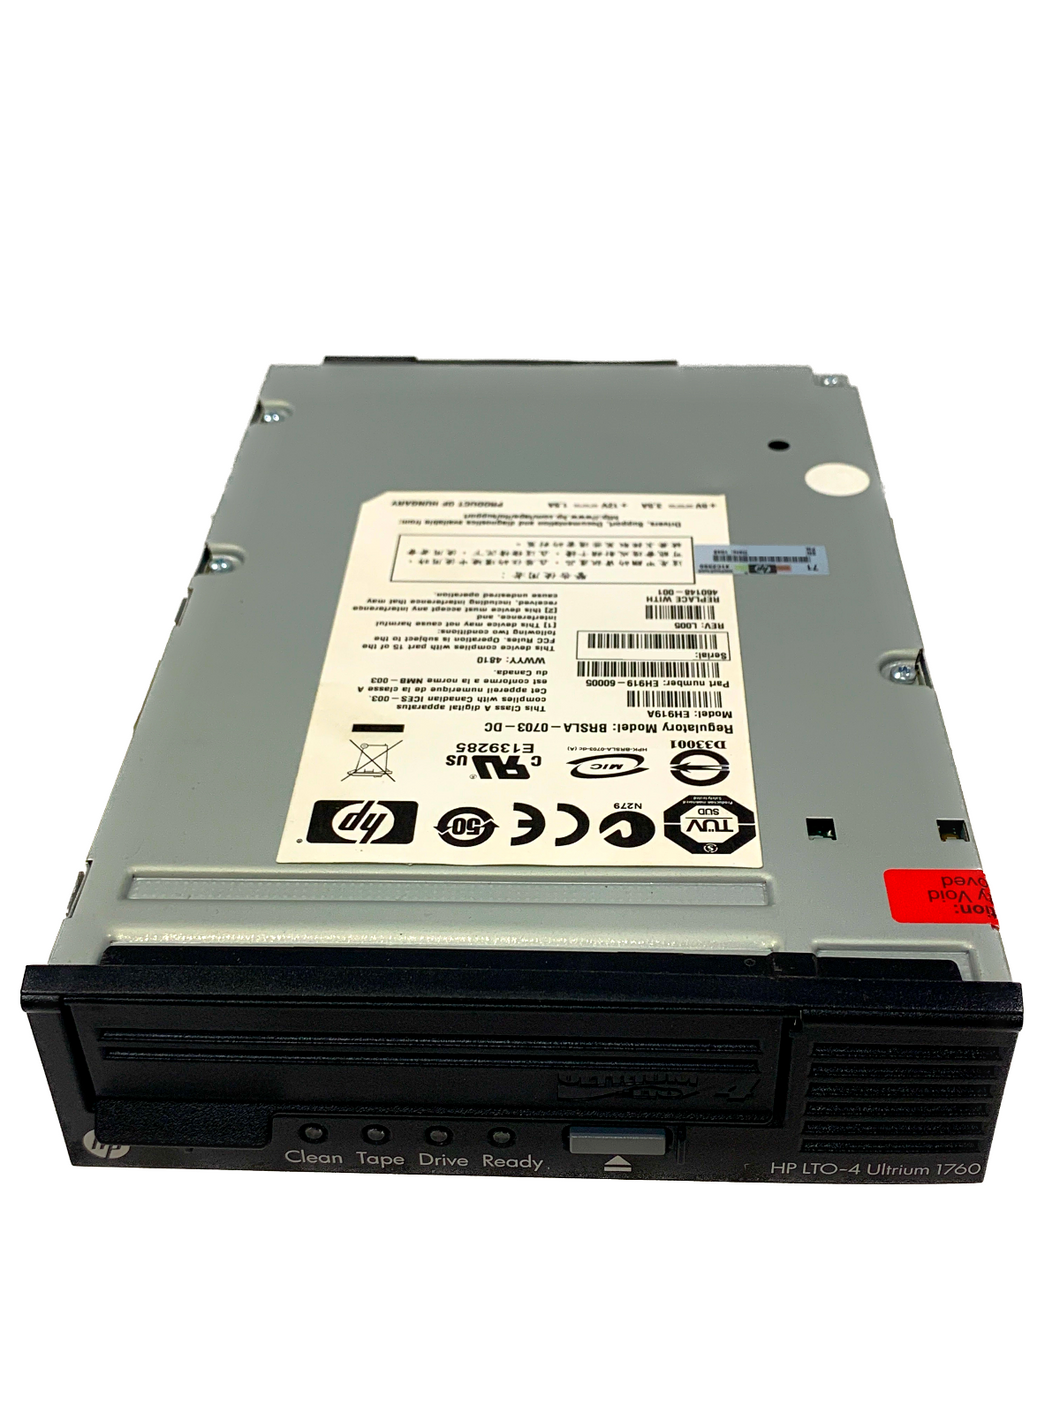 EH919A I HP StorageWorks LTO Ultrium 4 1760 Tape Drive SAS 5.25